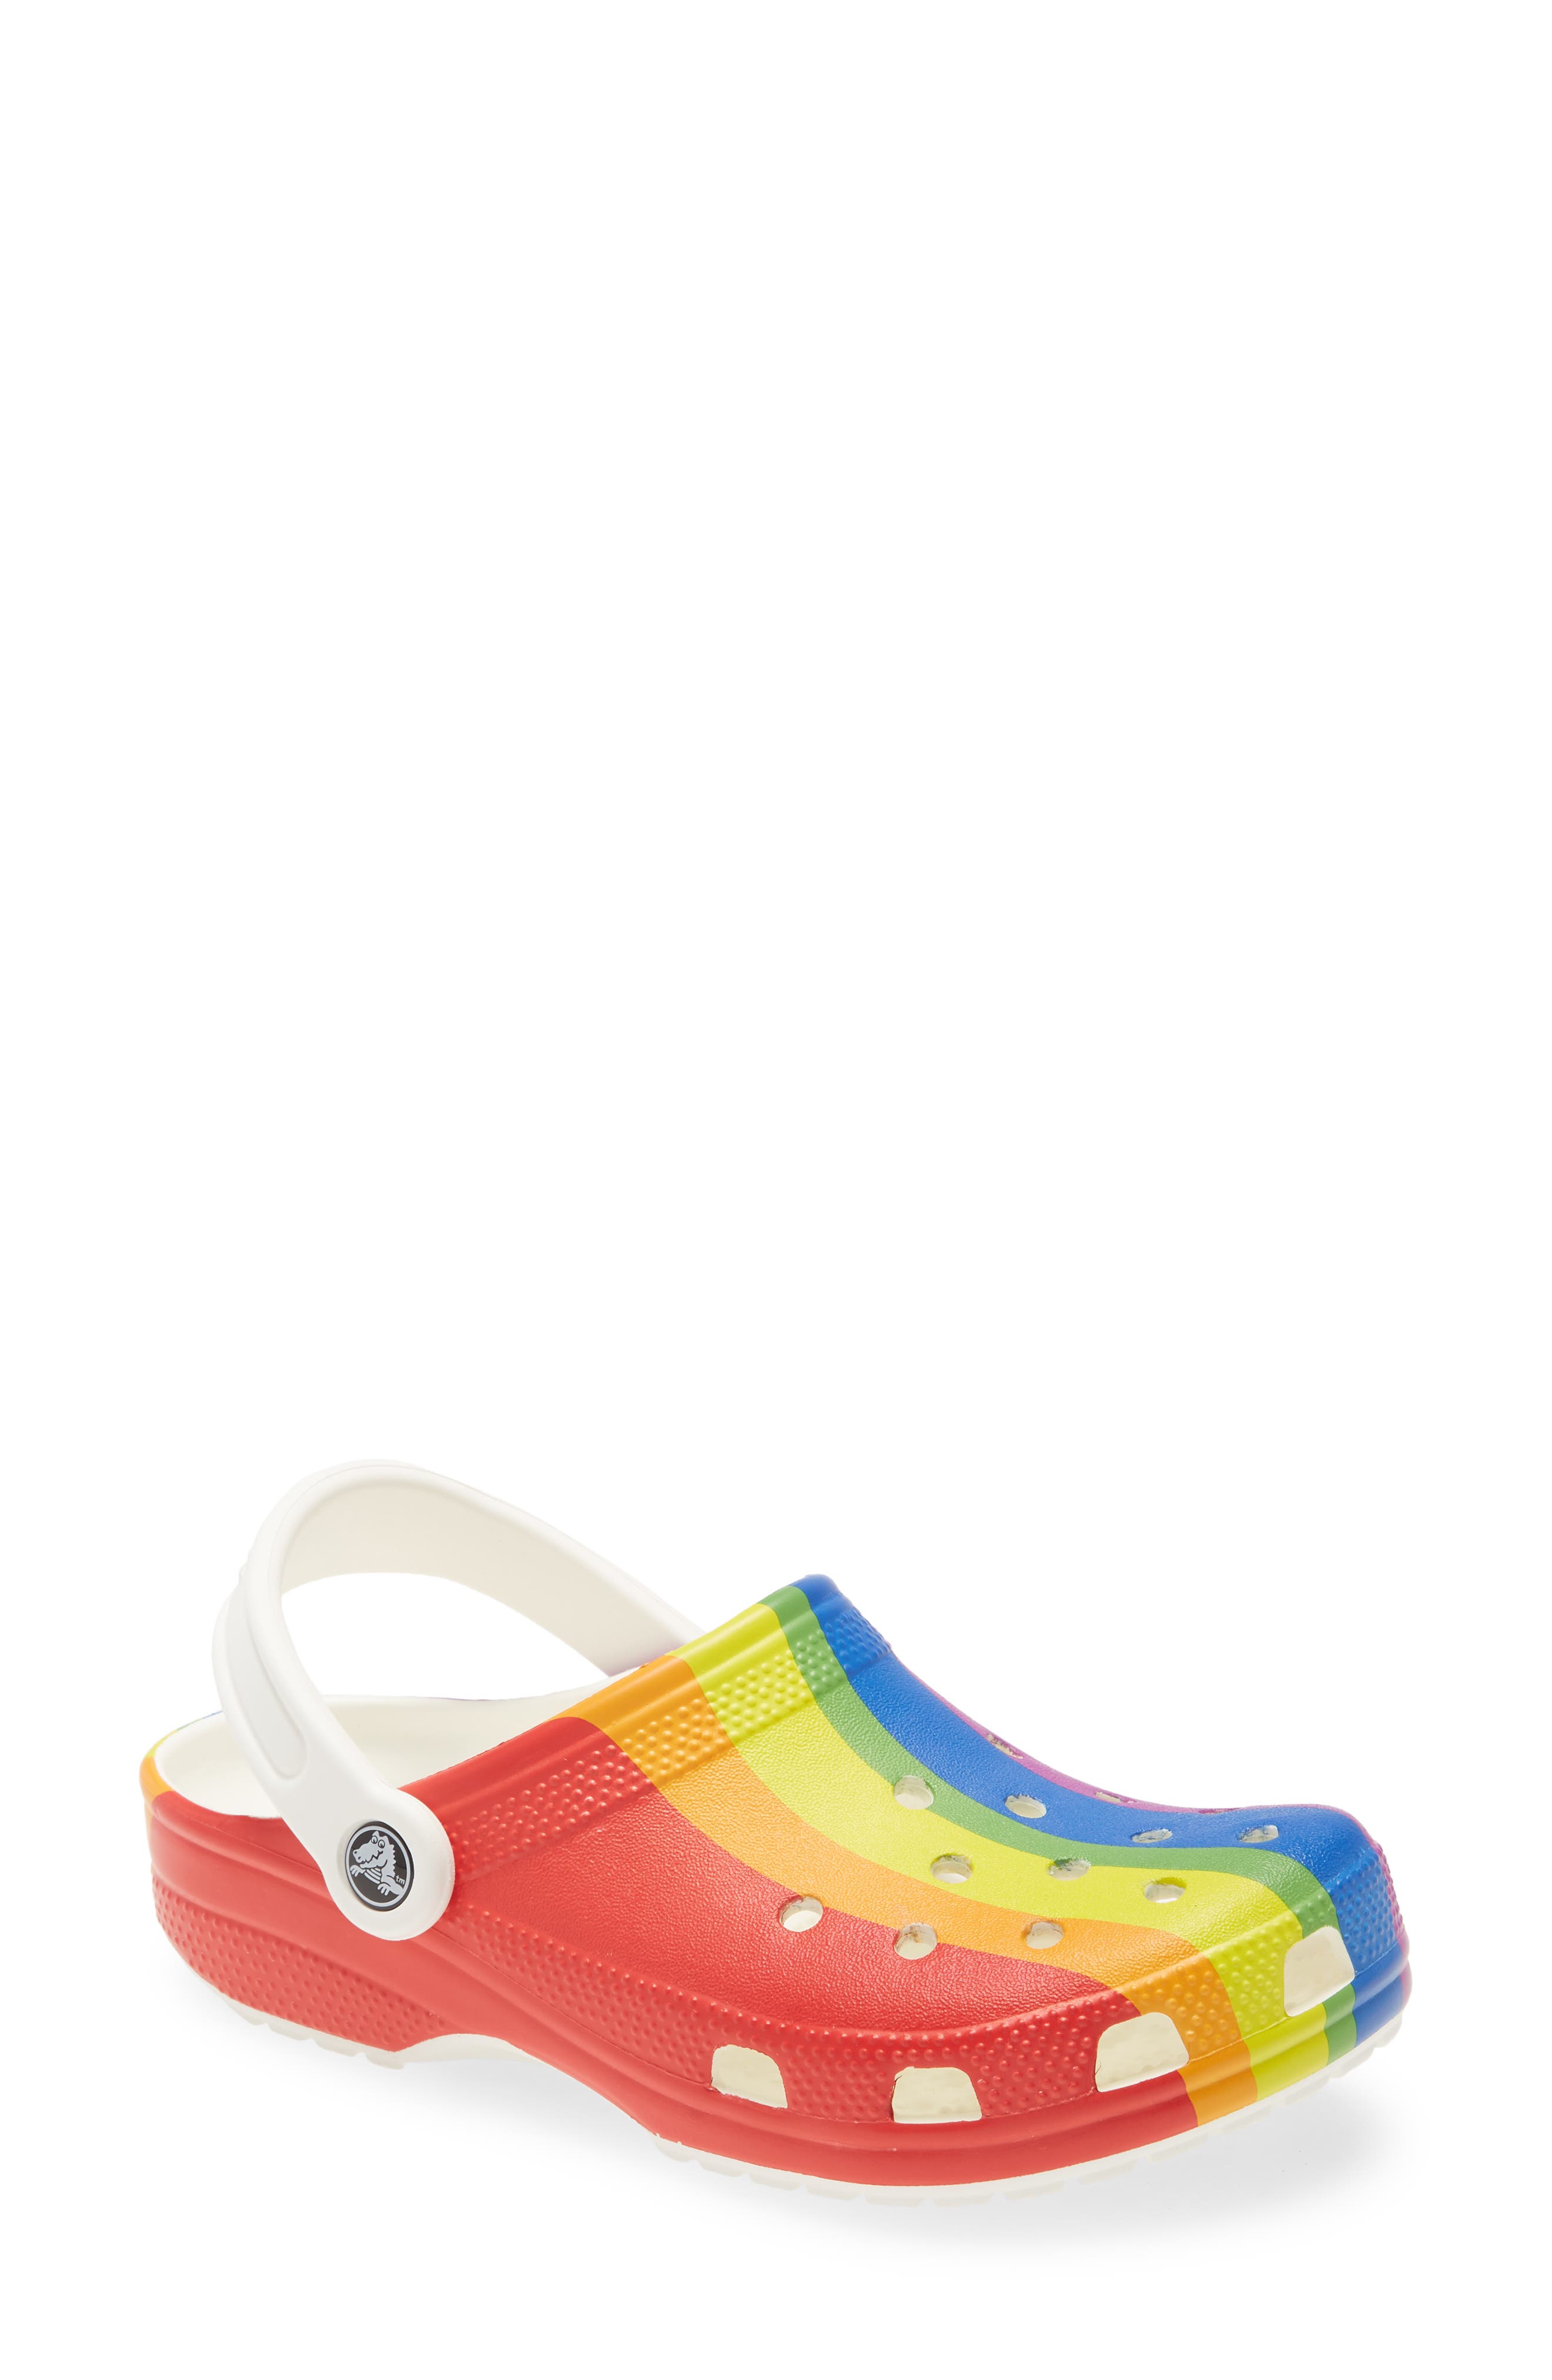 rainbow crocs womens